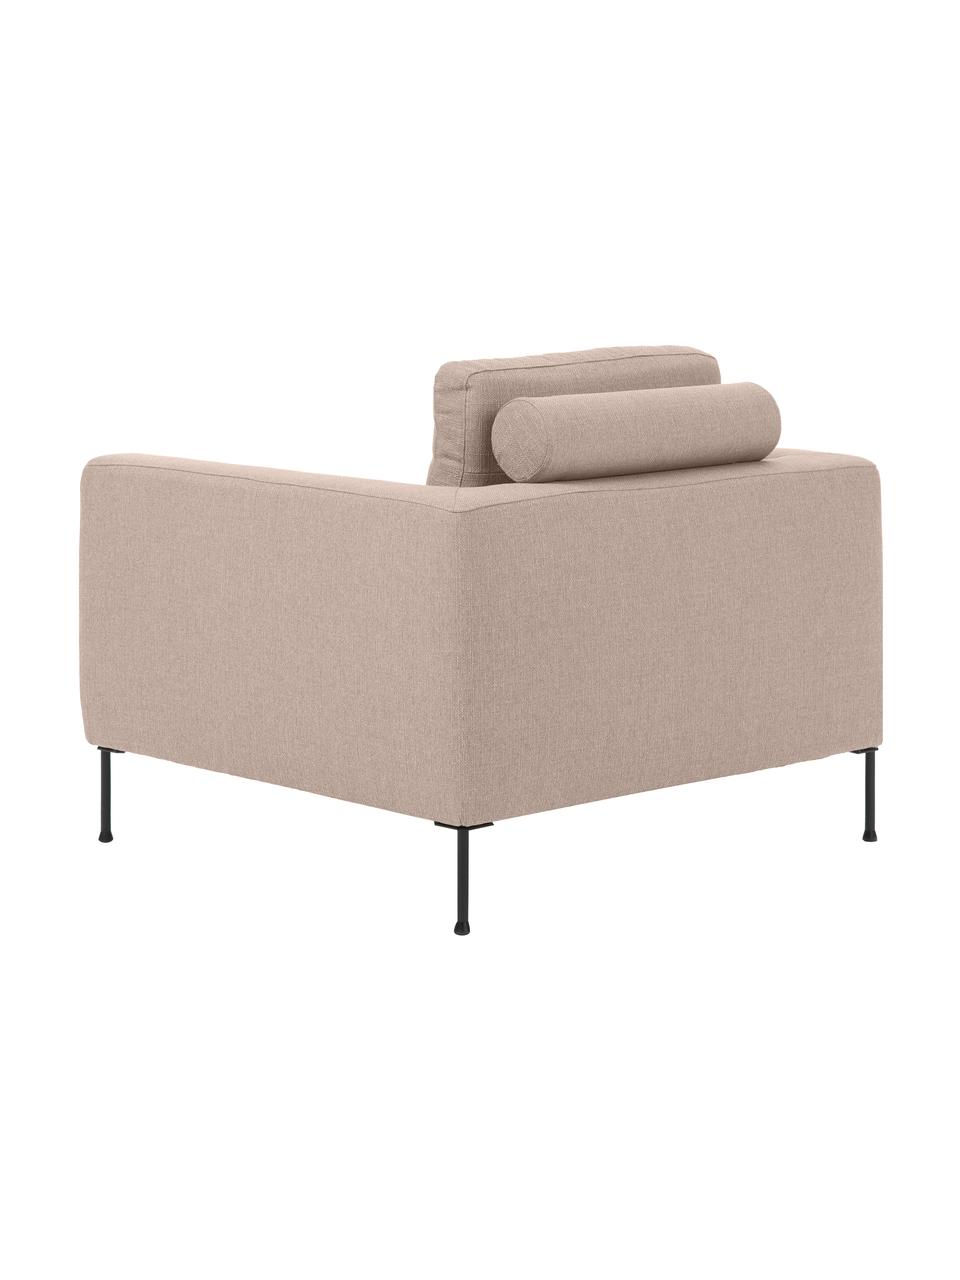 Sofa-Sessel Cucita in Taupe mit Metall-Füßen, Bezug: Webstoff (100% Polyester), Gestell: Massives Kiefernholz, FSC, Füße: Metall, lackiert, Webstoff Taupe, B 98 x T 94 cm